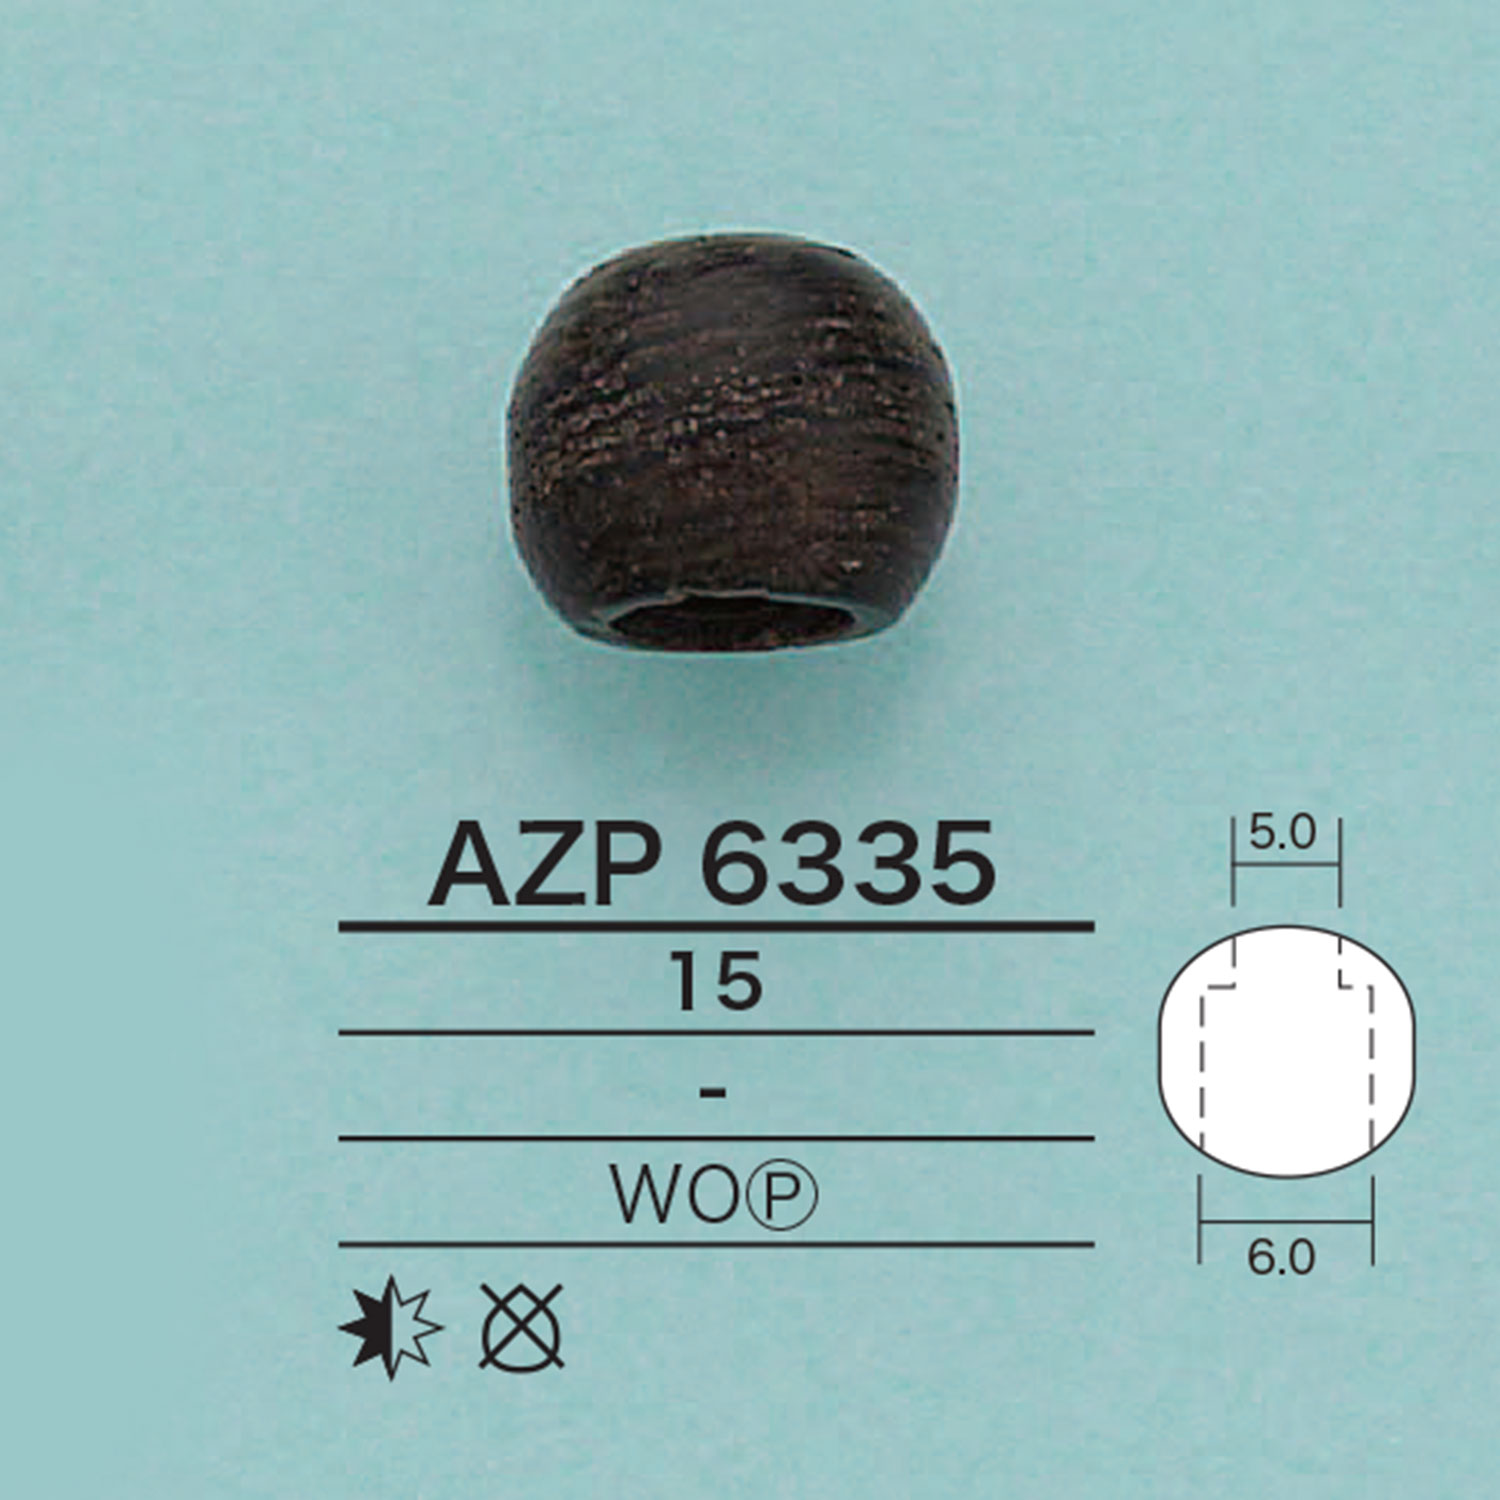 AZP6335 丸型コードエンド(木製)[バックル・カン類] アイリス